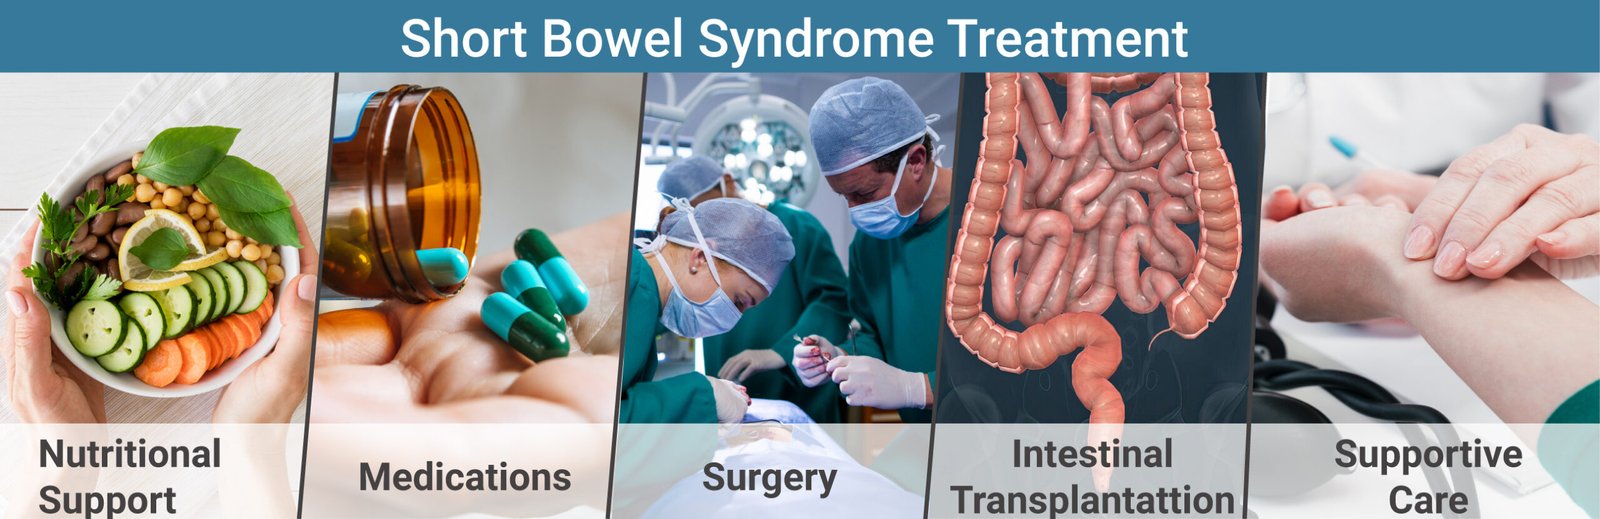 treatment short bowel syndrome